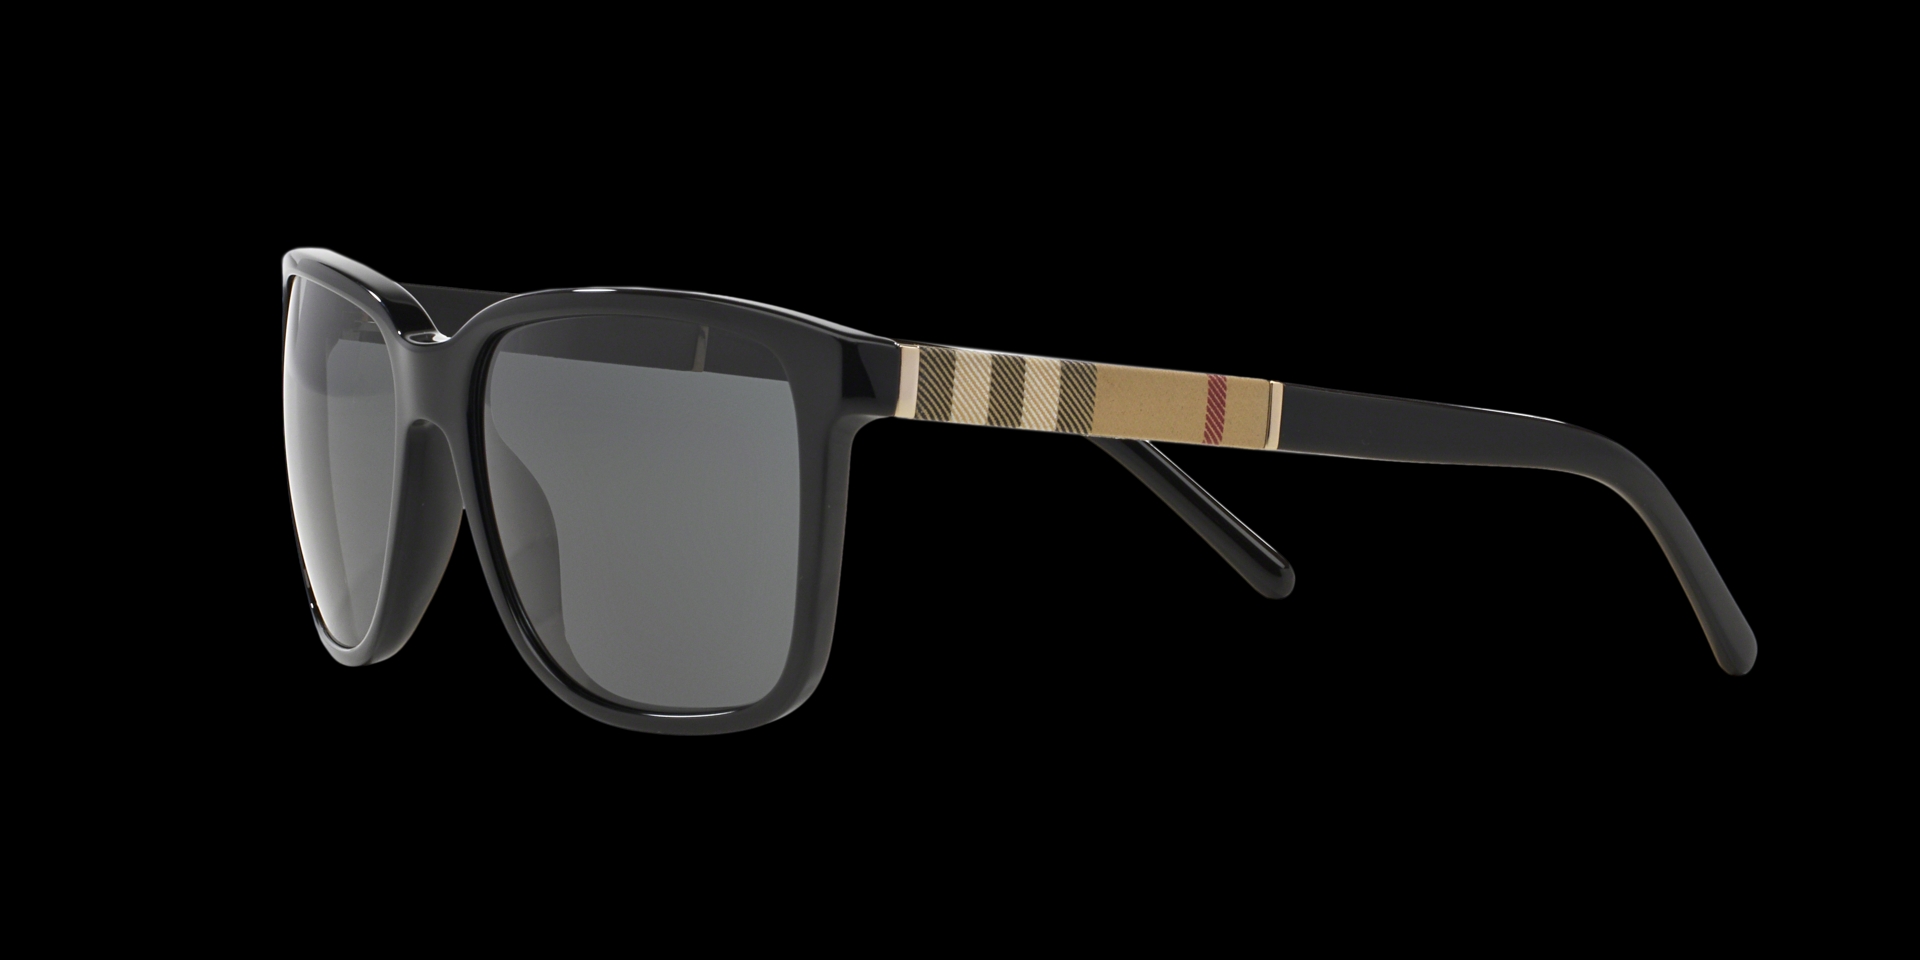 Stylish Sunglasses for Mr. Burberry's Campaign